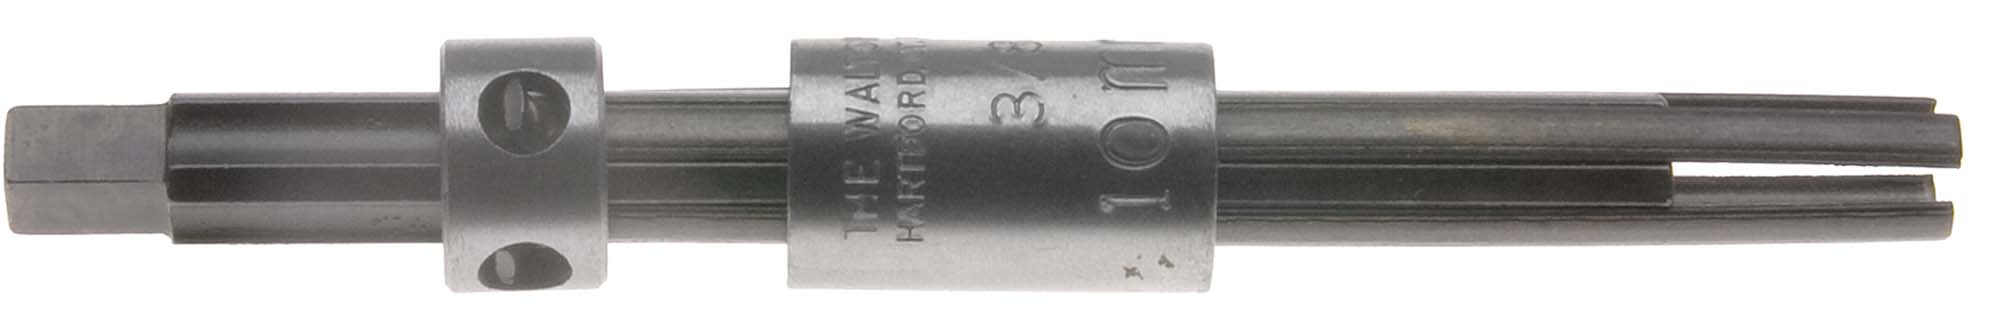 1" 4 Flute Walton Tap Extractor